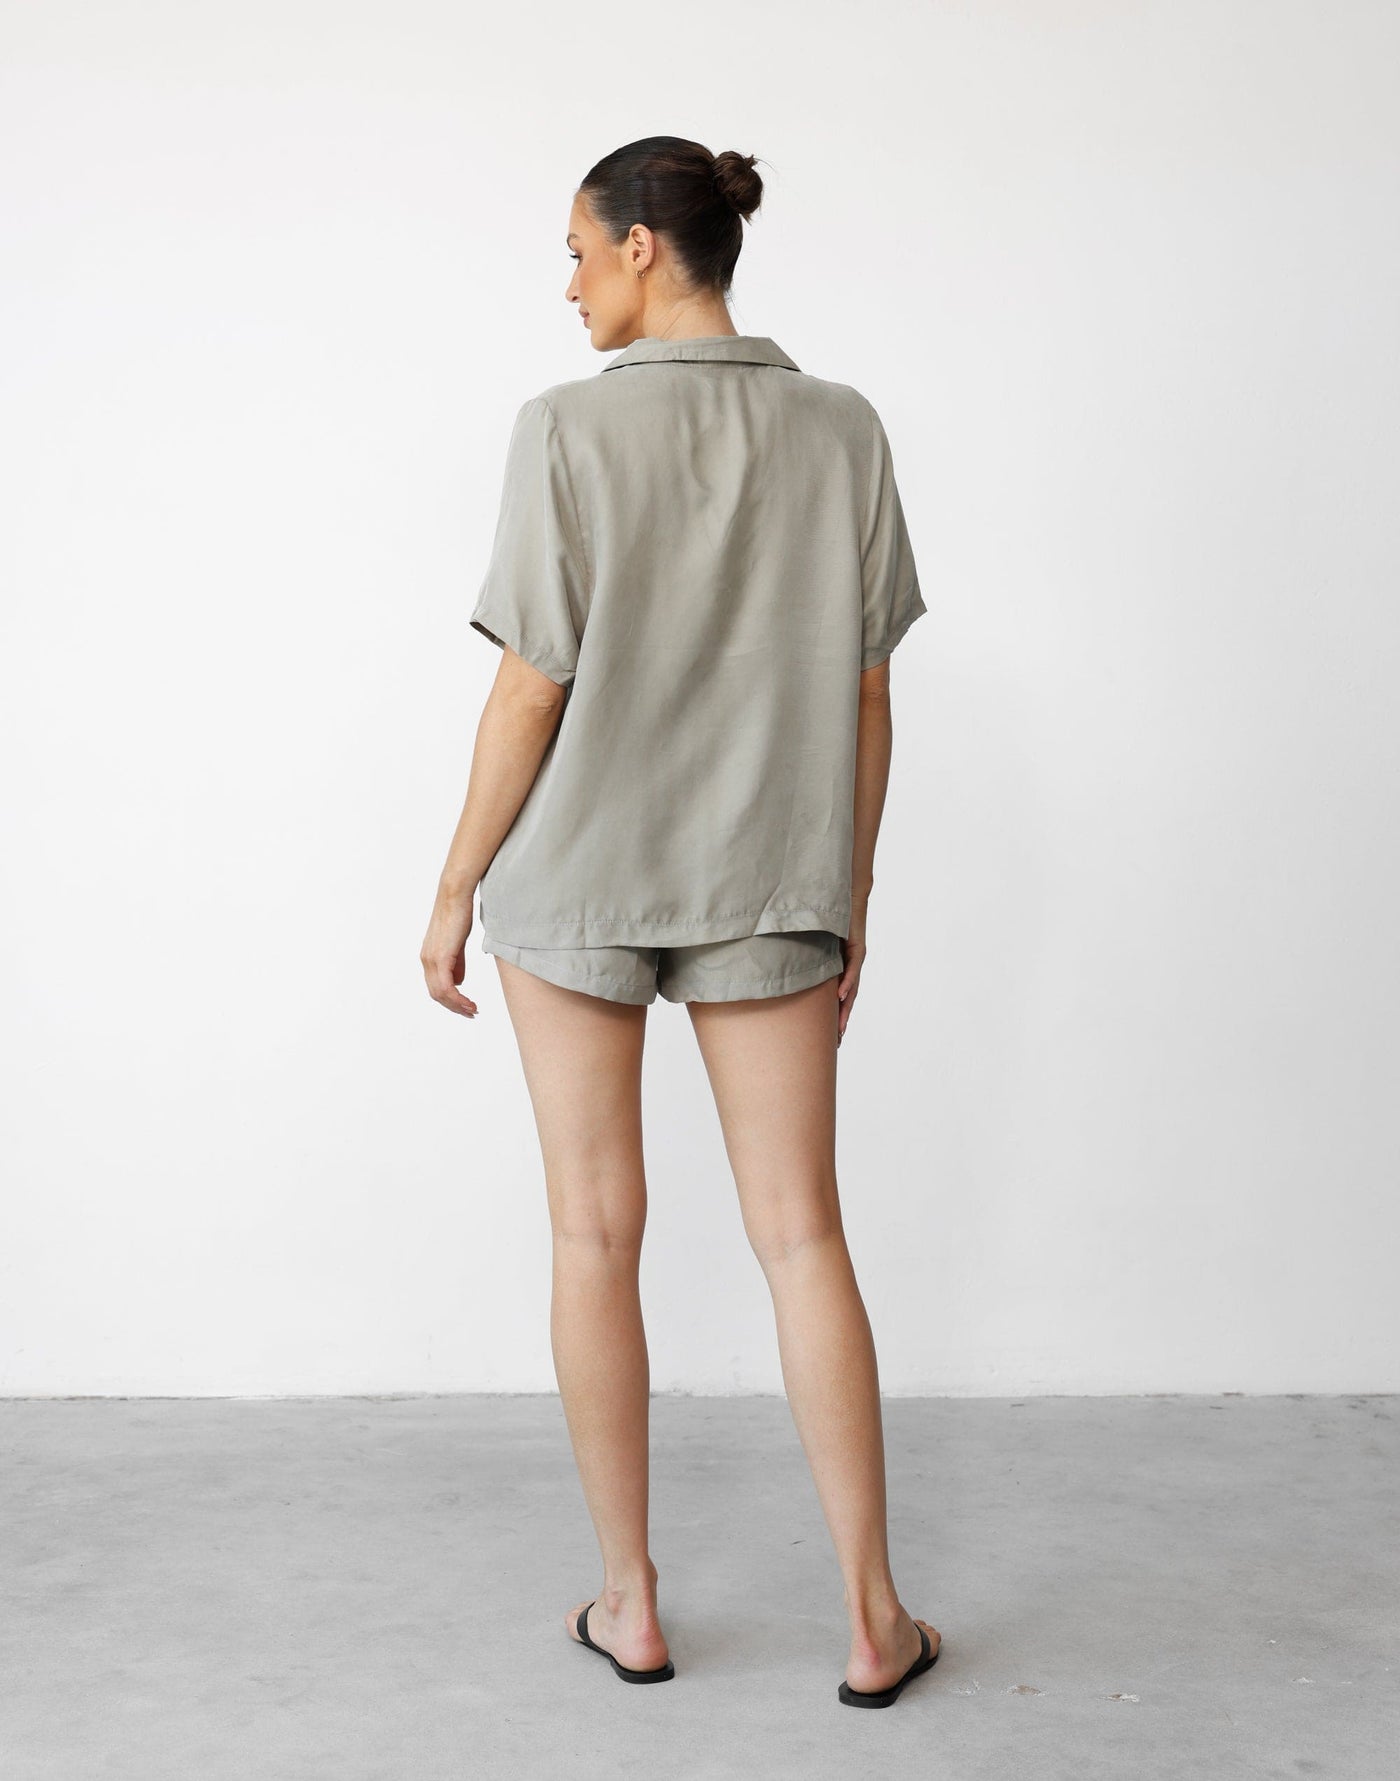 Minni Shirt (Pistachio) - Cupro Relaxed Fit Button Down Shirt - Women's Top - Charcoal Clothing